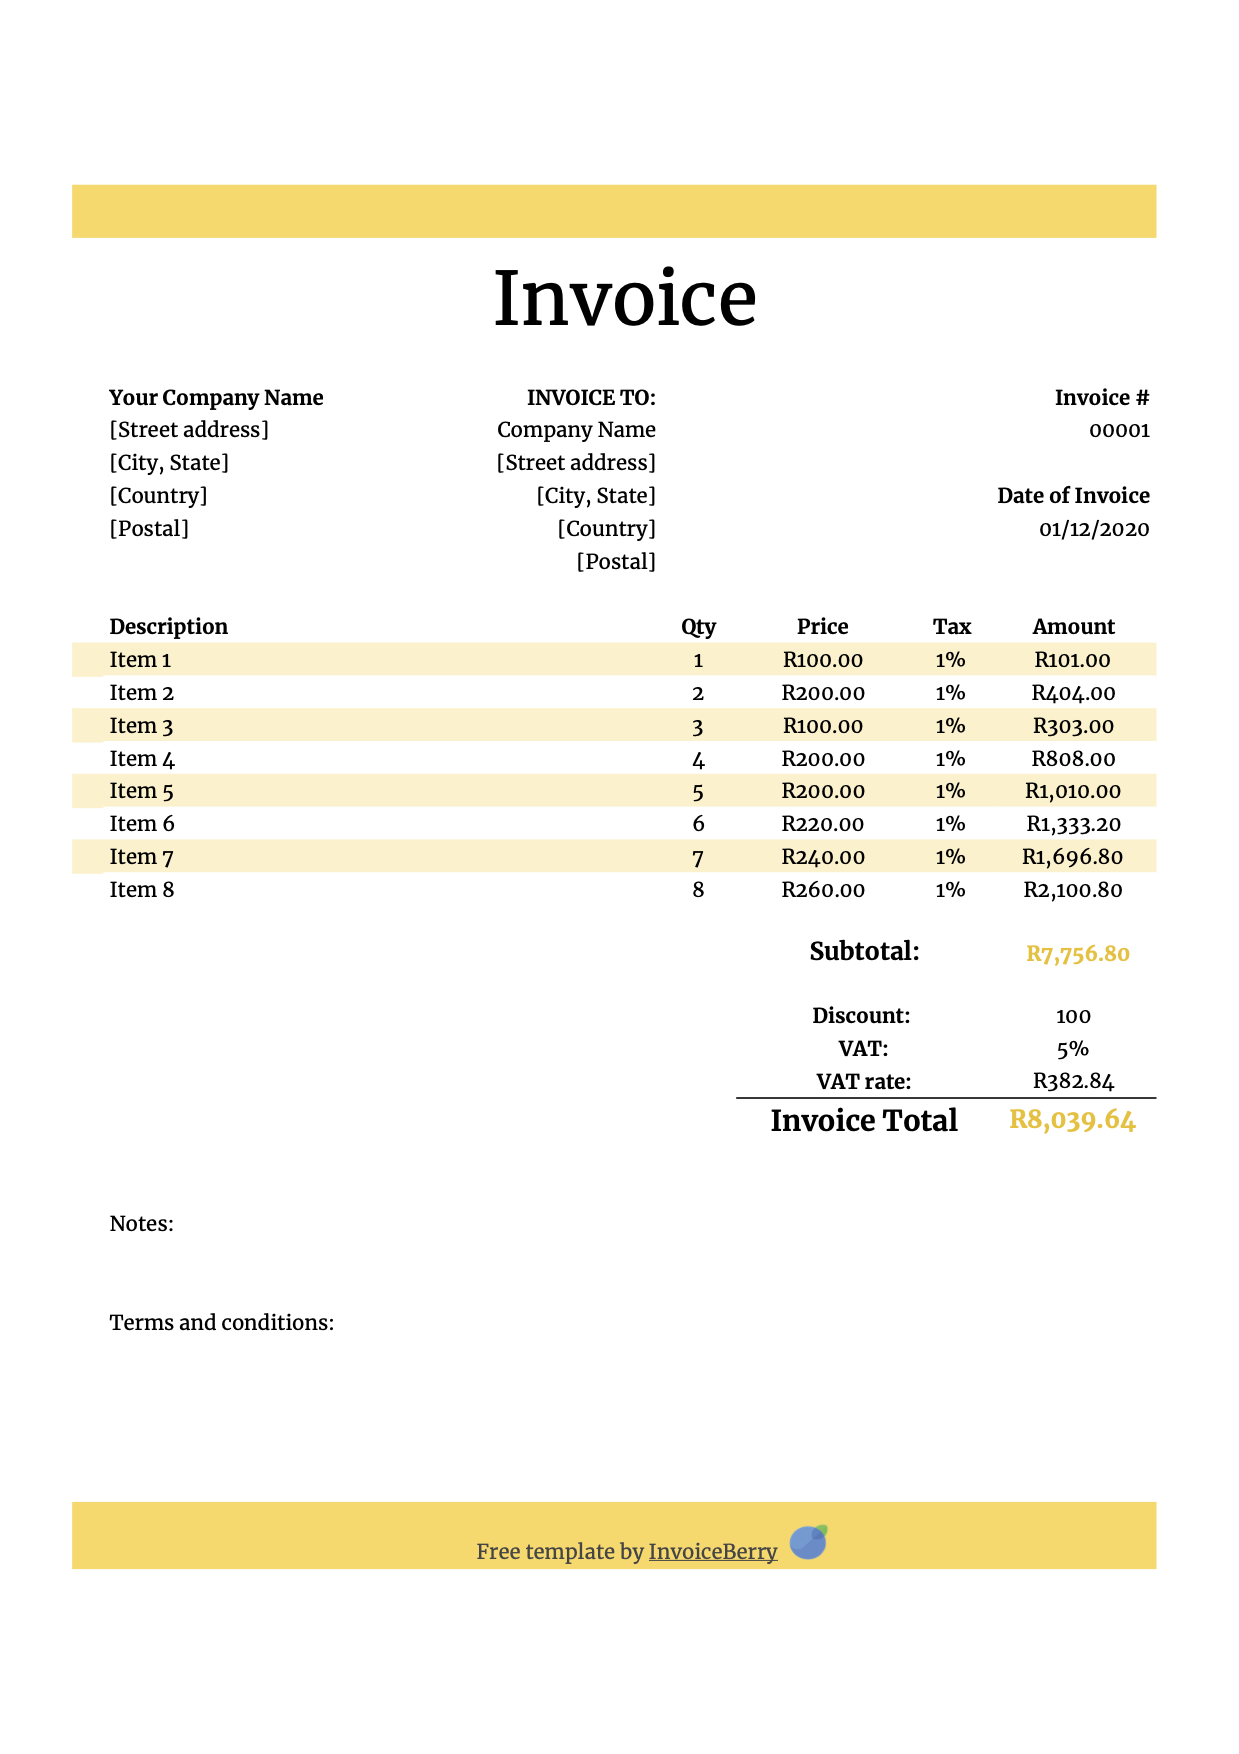 Free Google Drive Invoice Templates Blank Docs Sheets Invoices InvoiceBerry